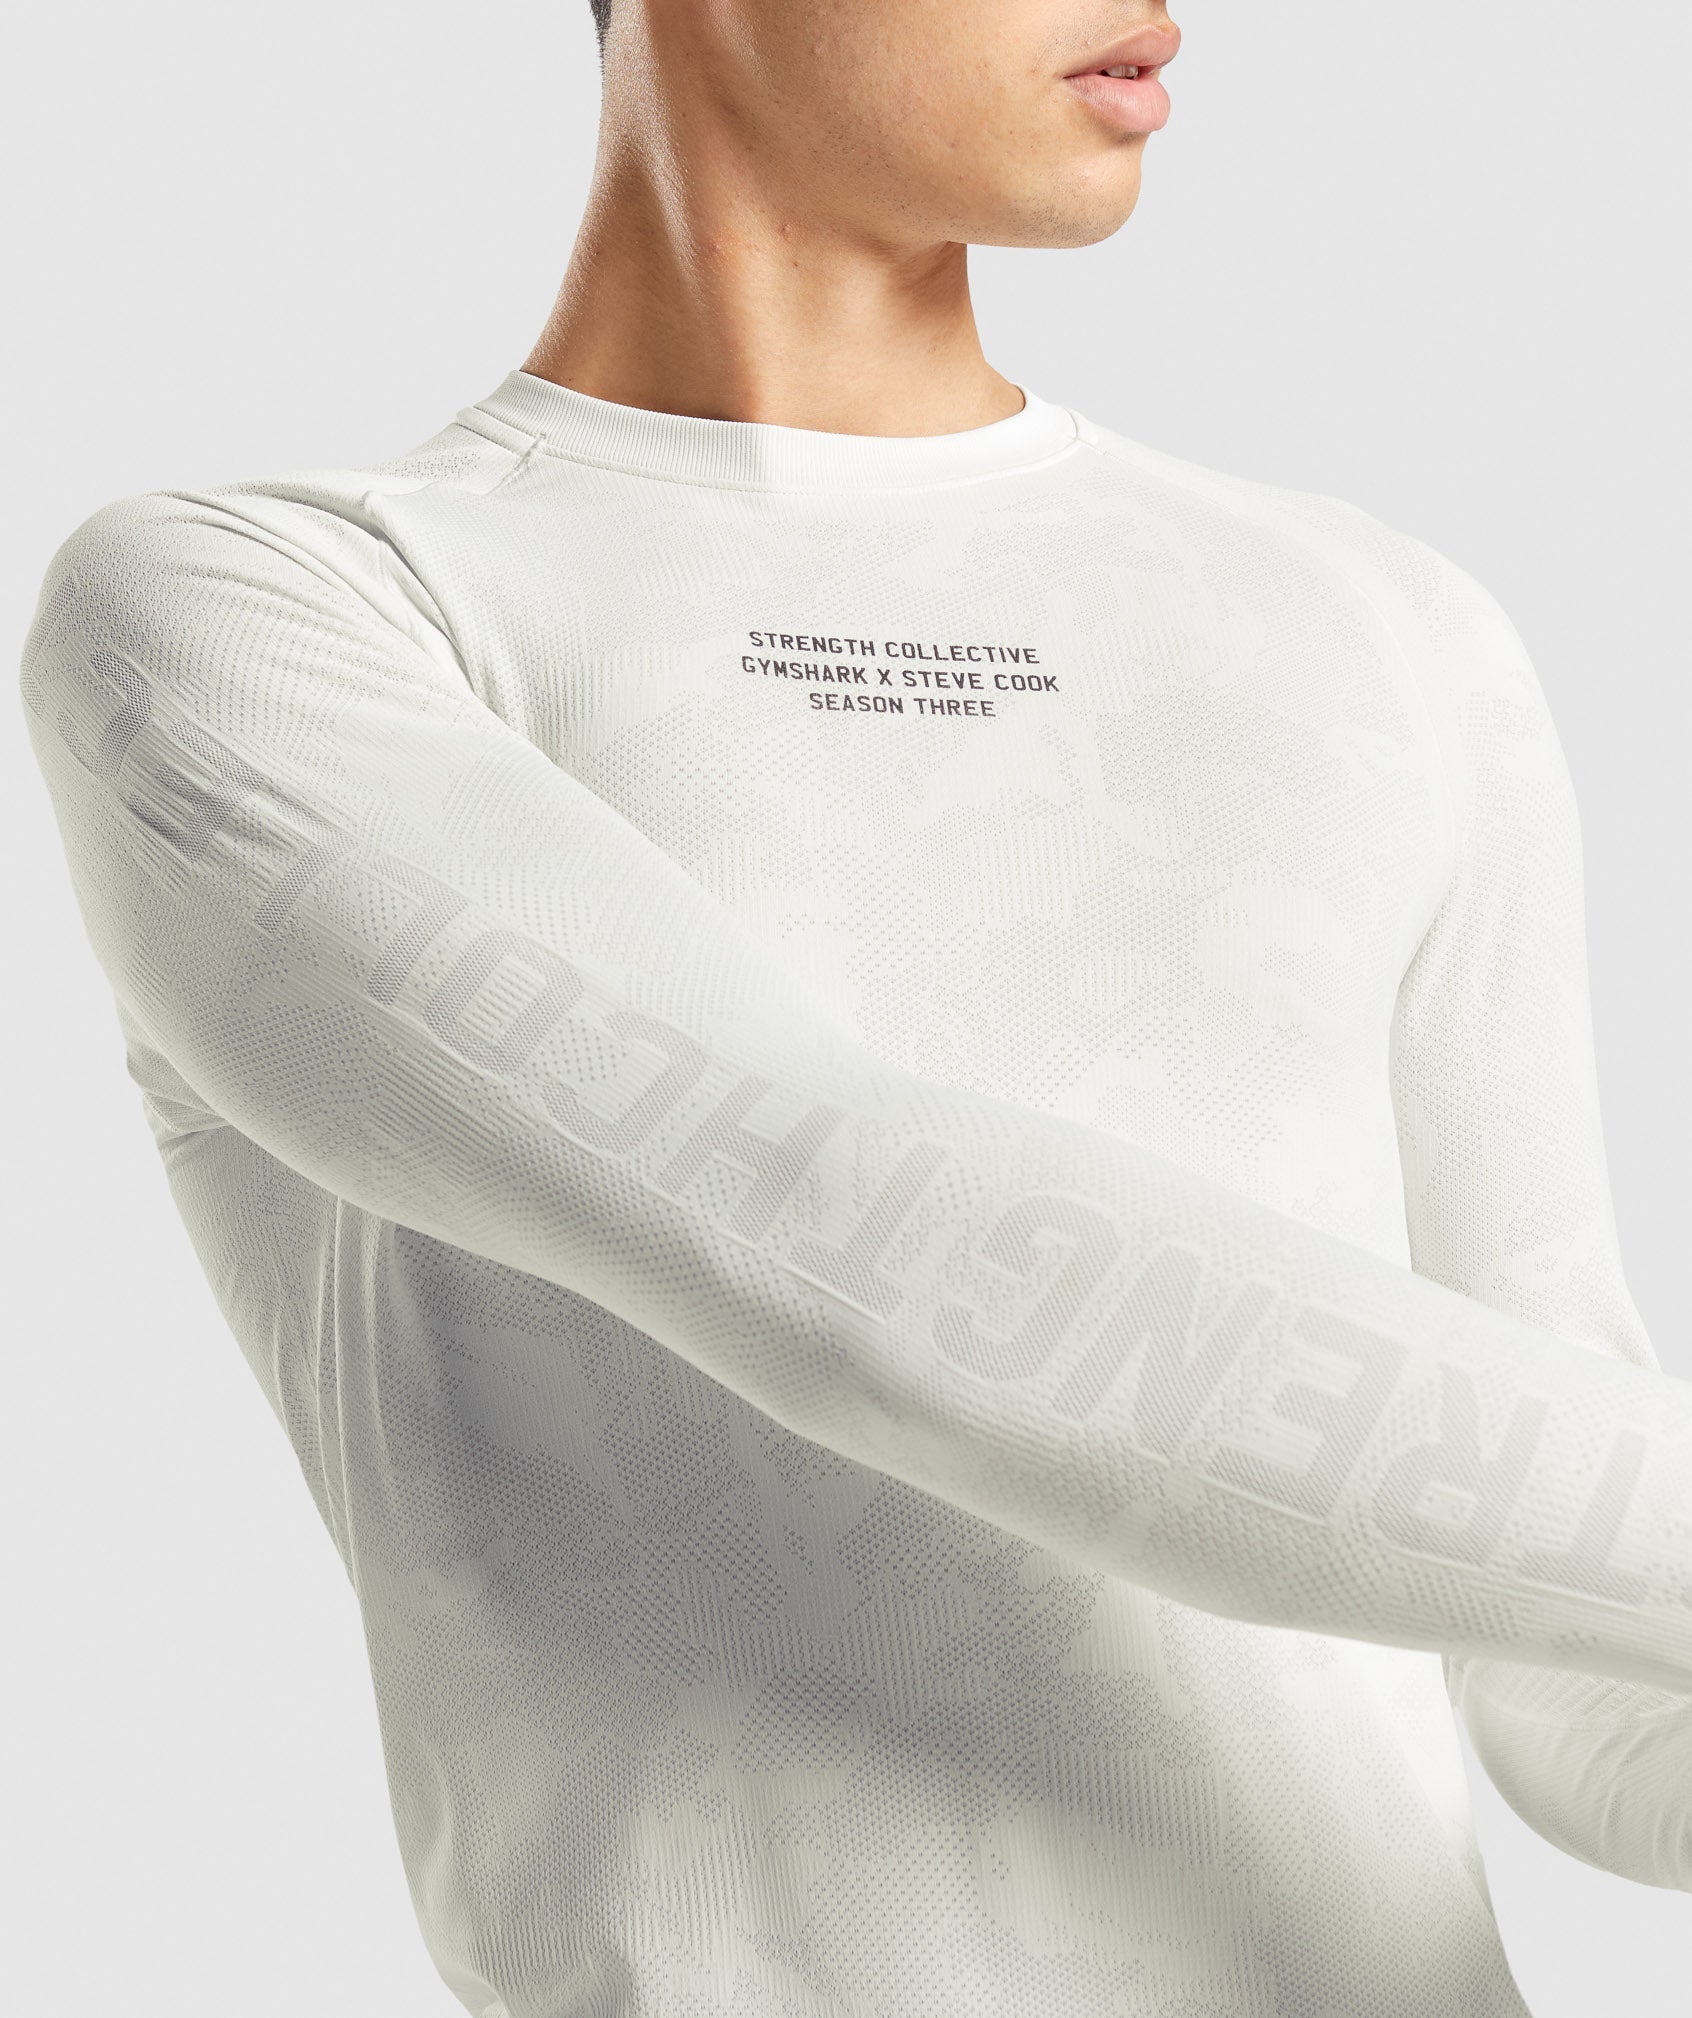 Gymshark//Steve Cook Long Sleeve Seamless T-Shirt in Off White/Light Grey - view 5